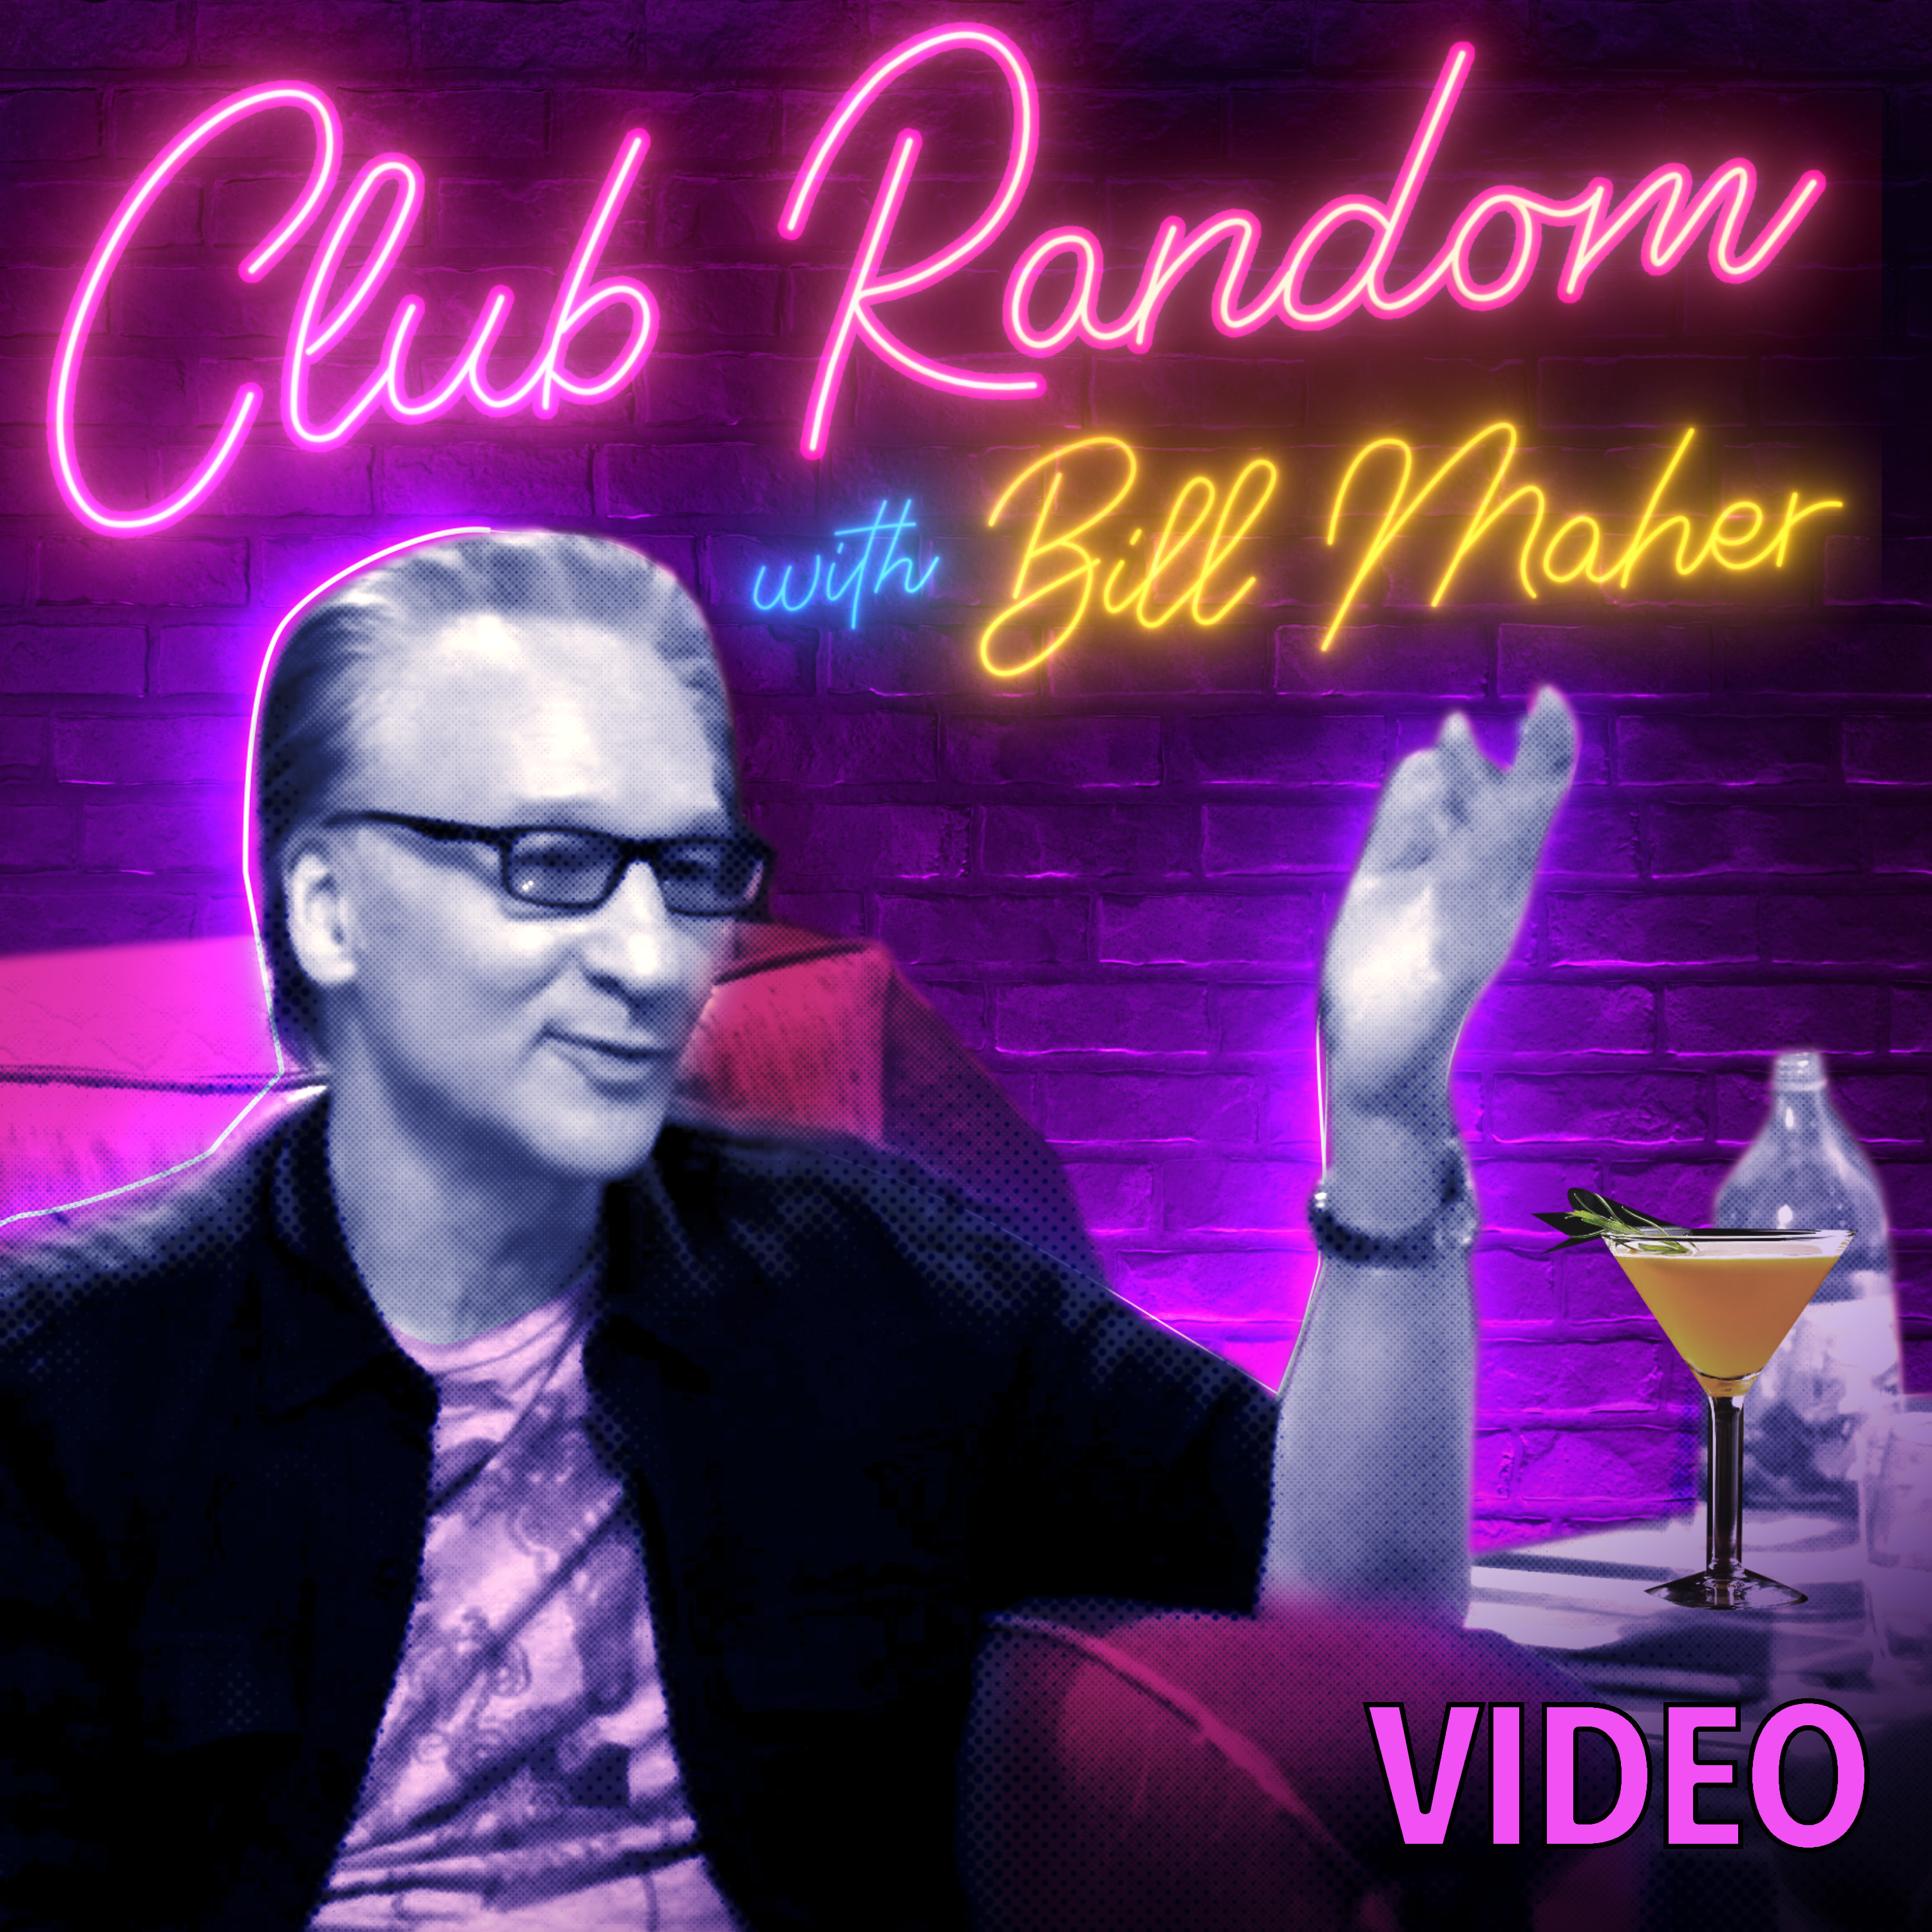 Video: Patrick Bet-David | Club Random with Bill Maher